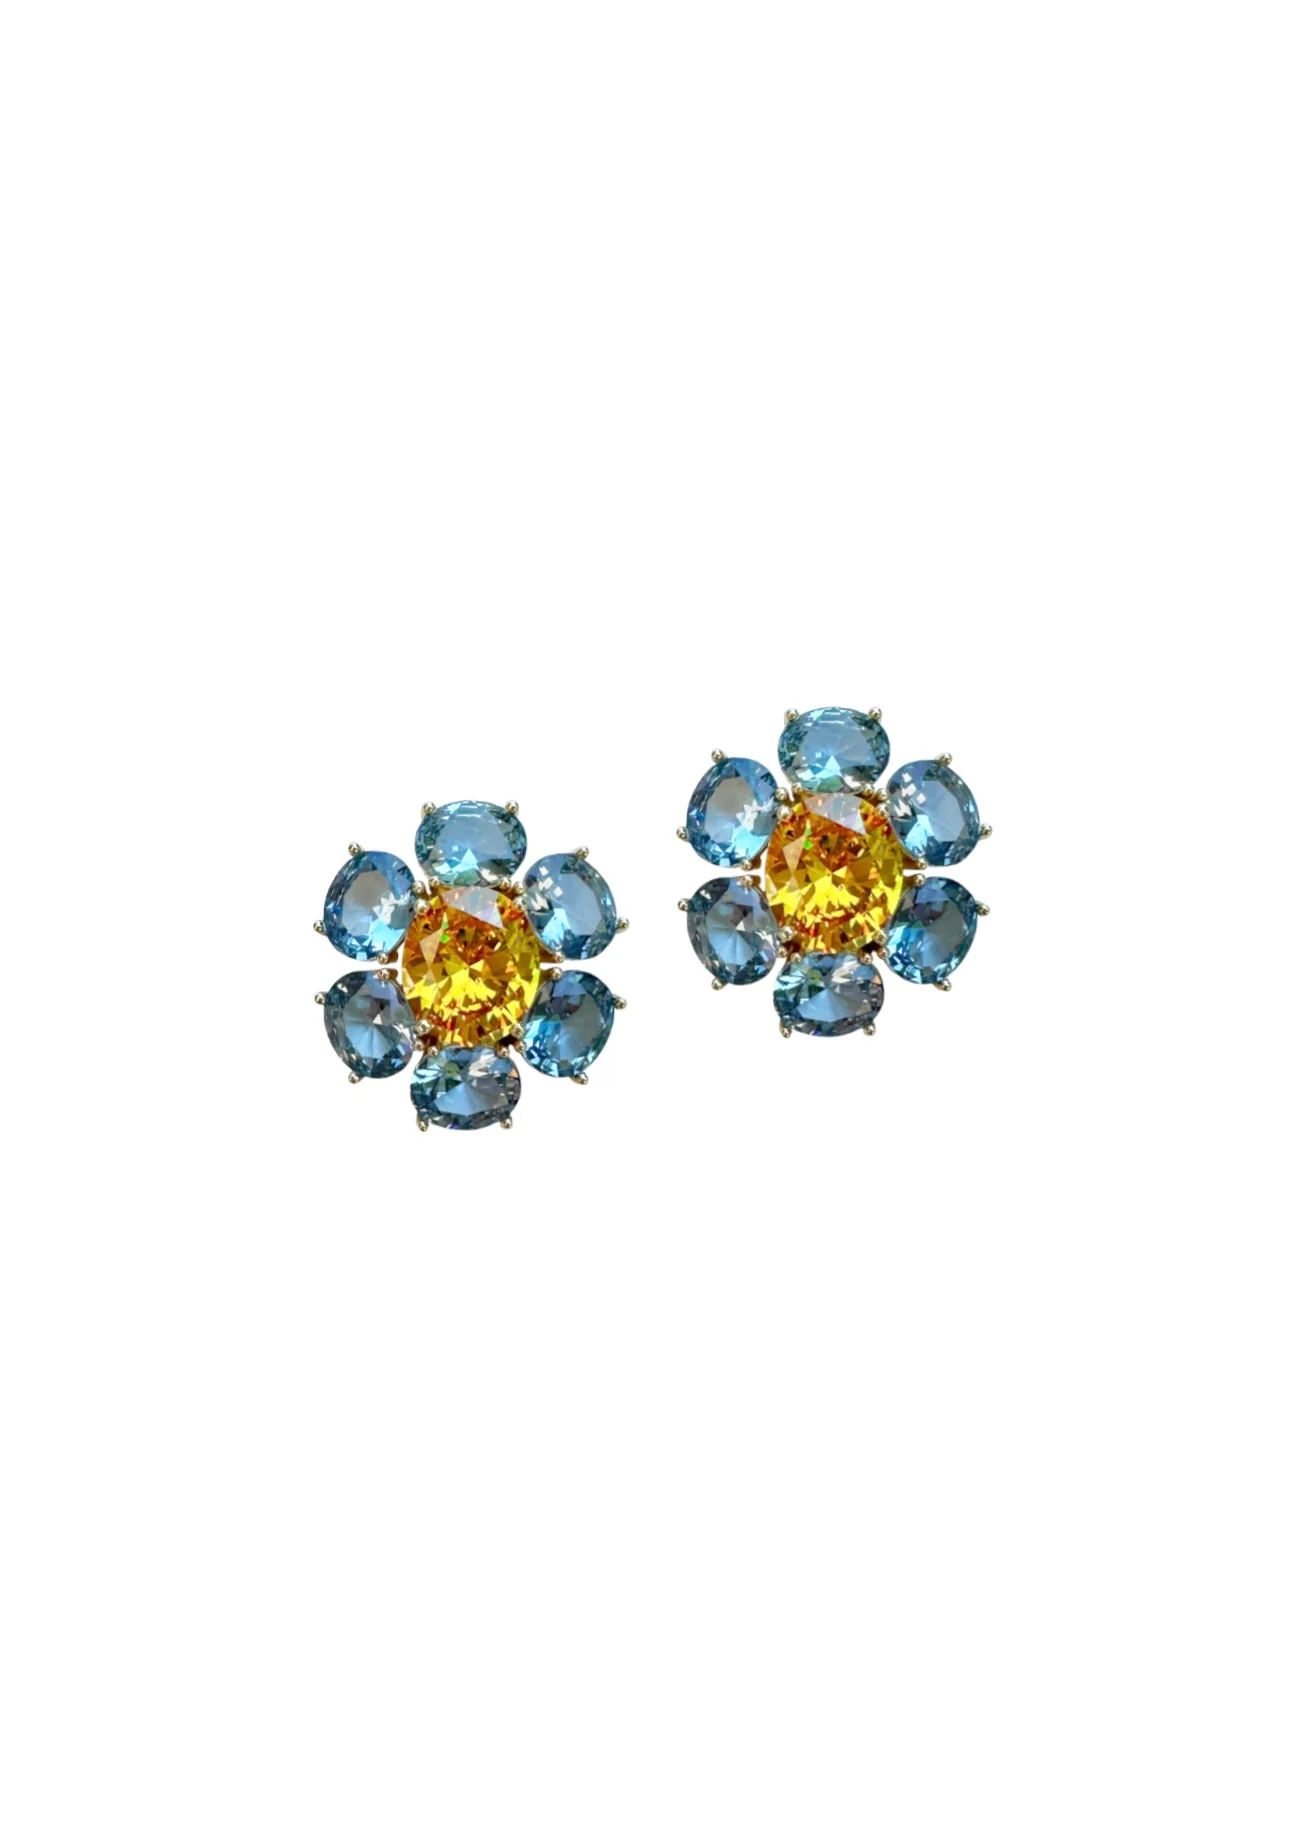 Paris Blue and Marigold Flower Stud | Nicola Bathie Jewelry